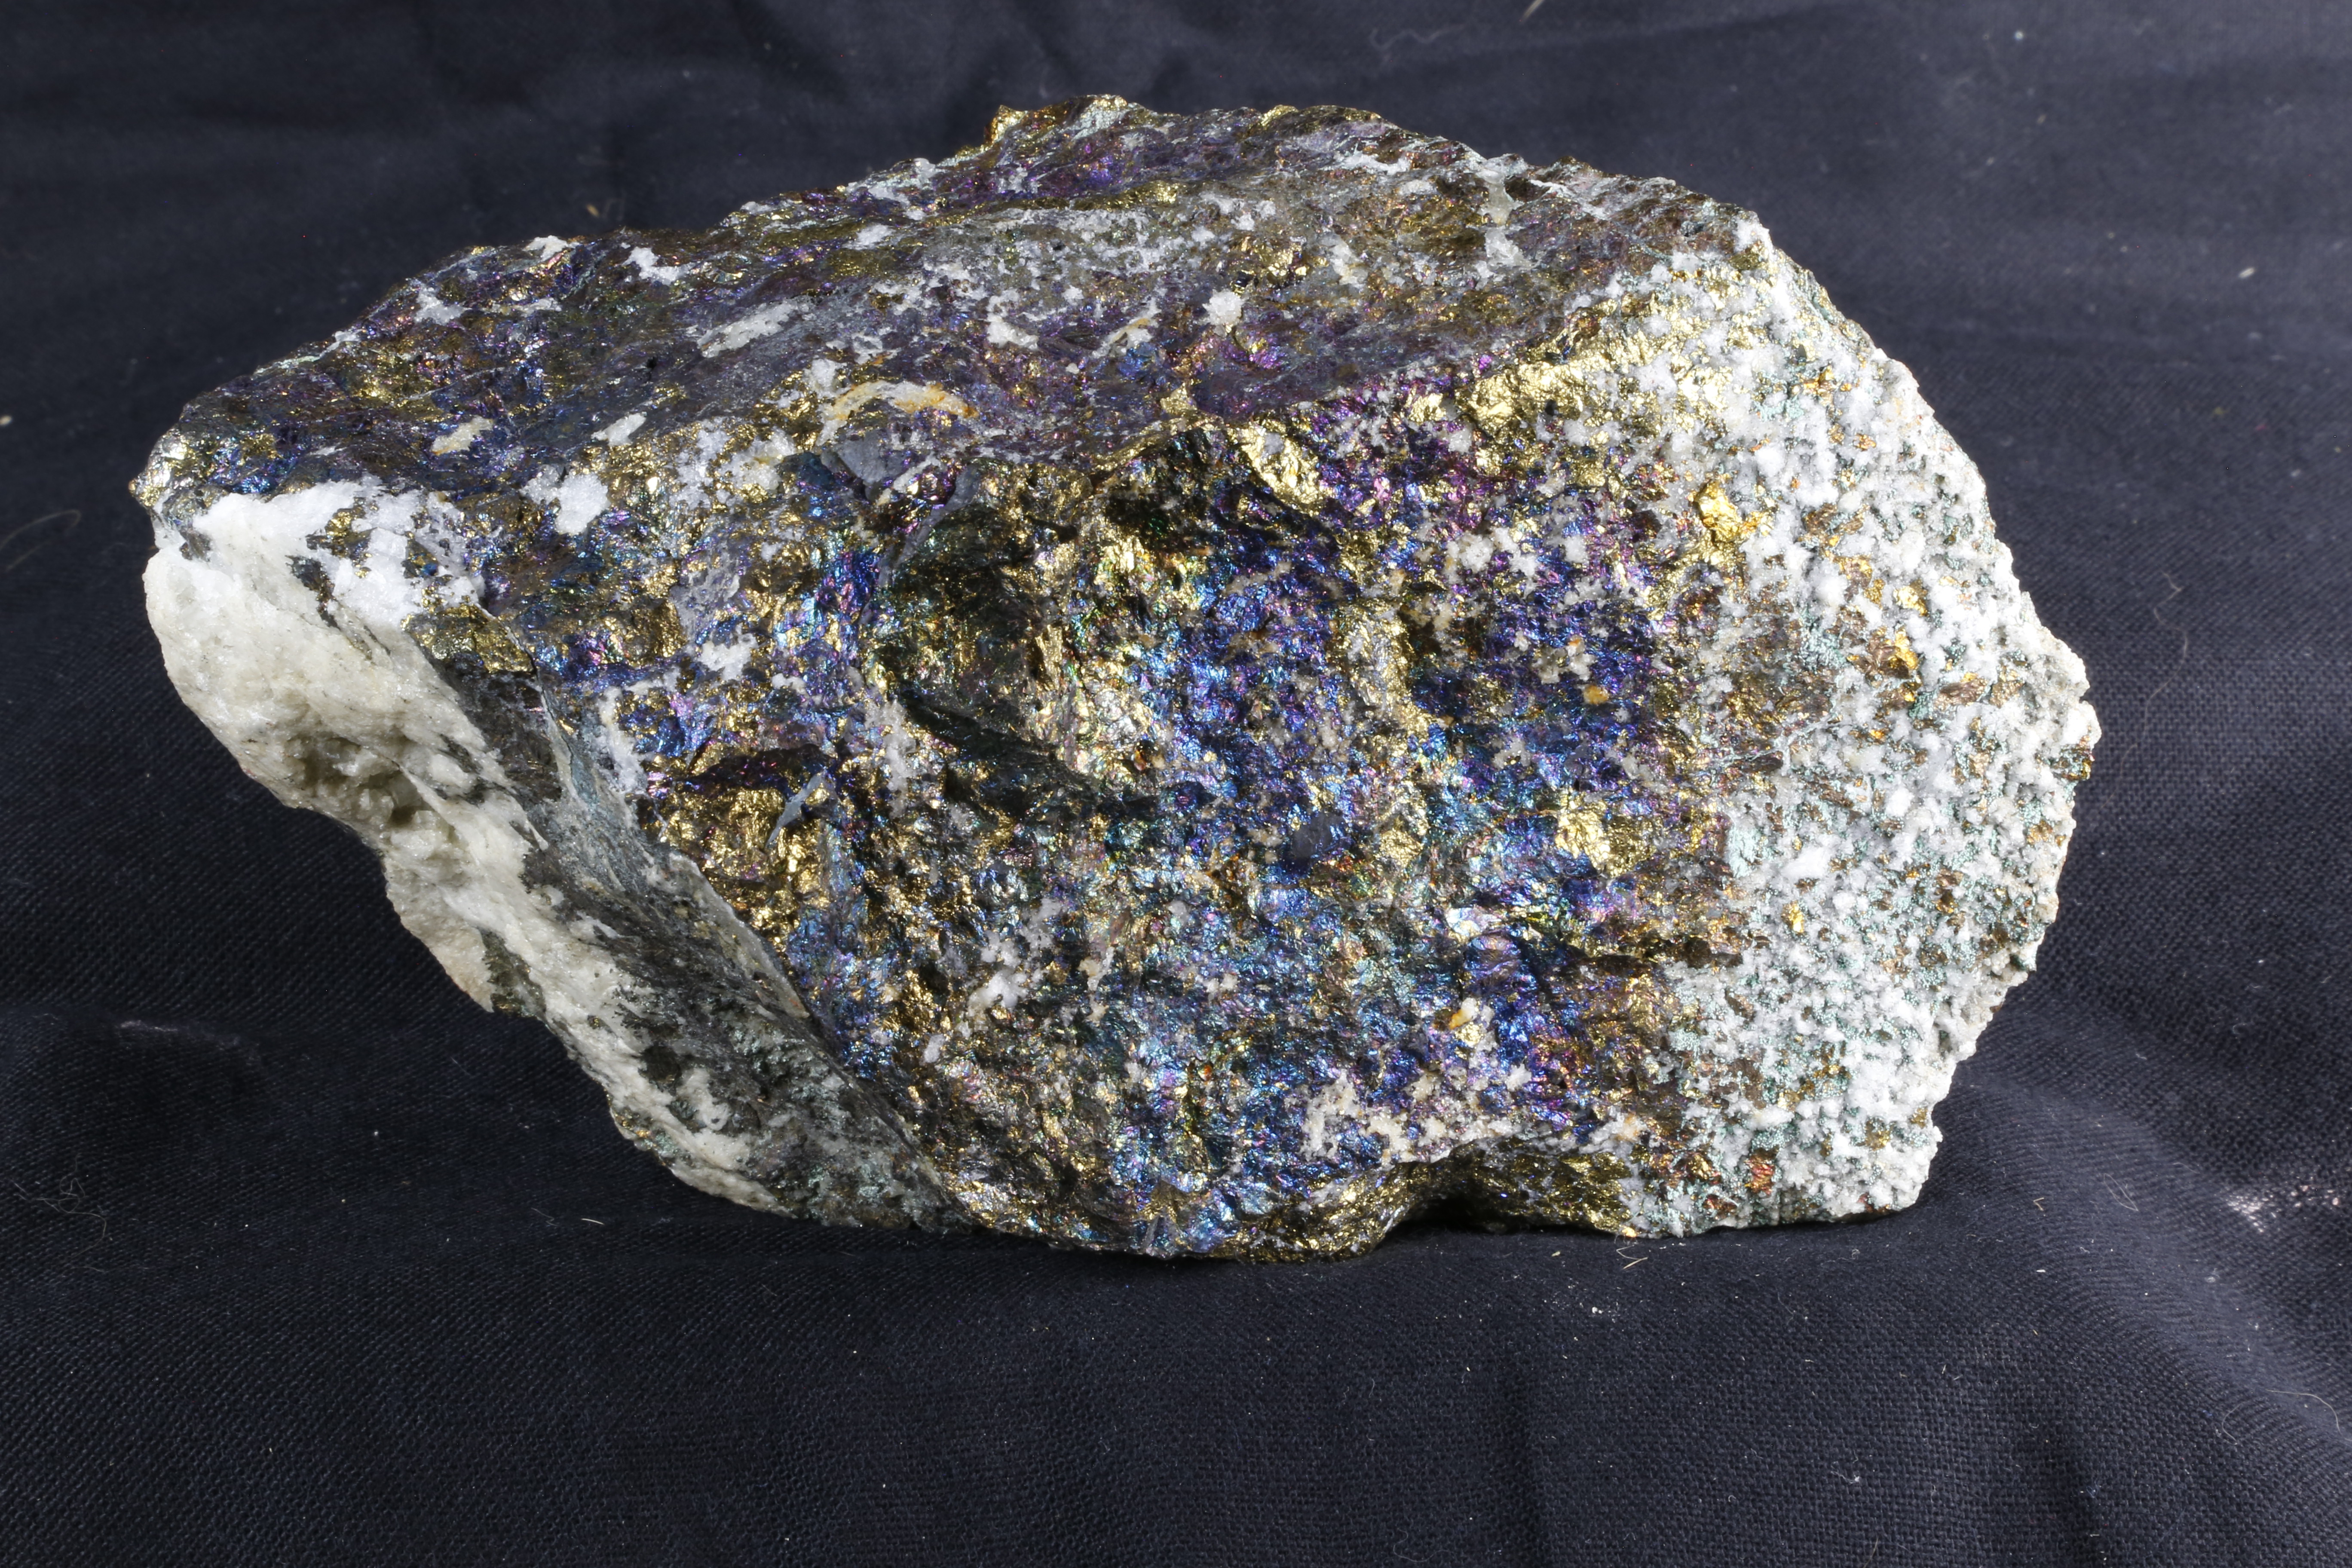 Mithril, a very precious mineral